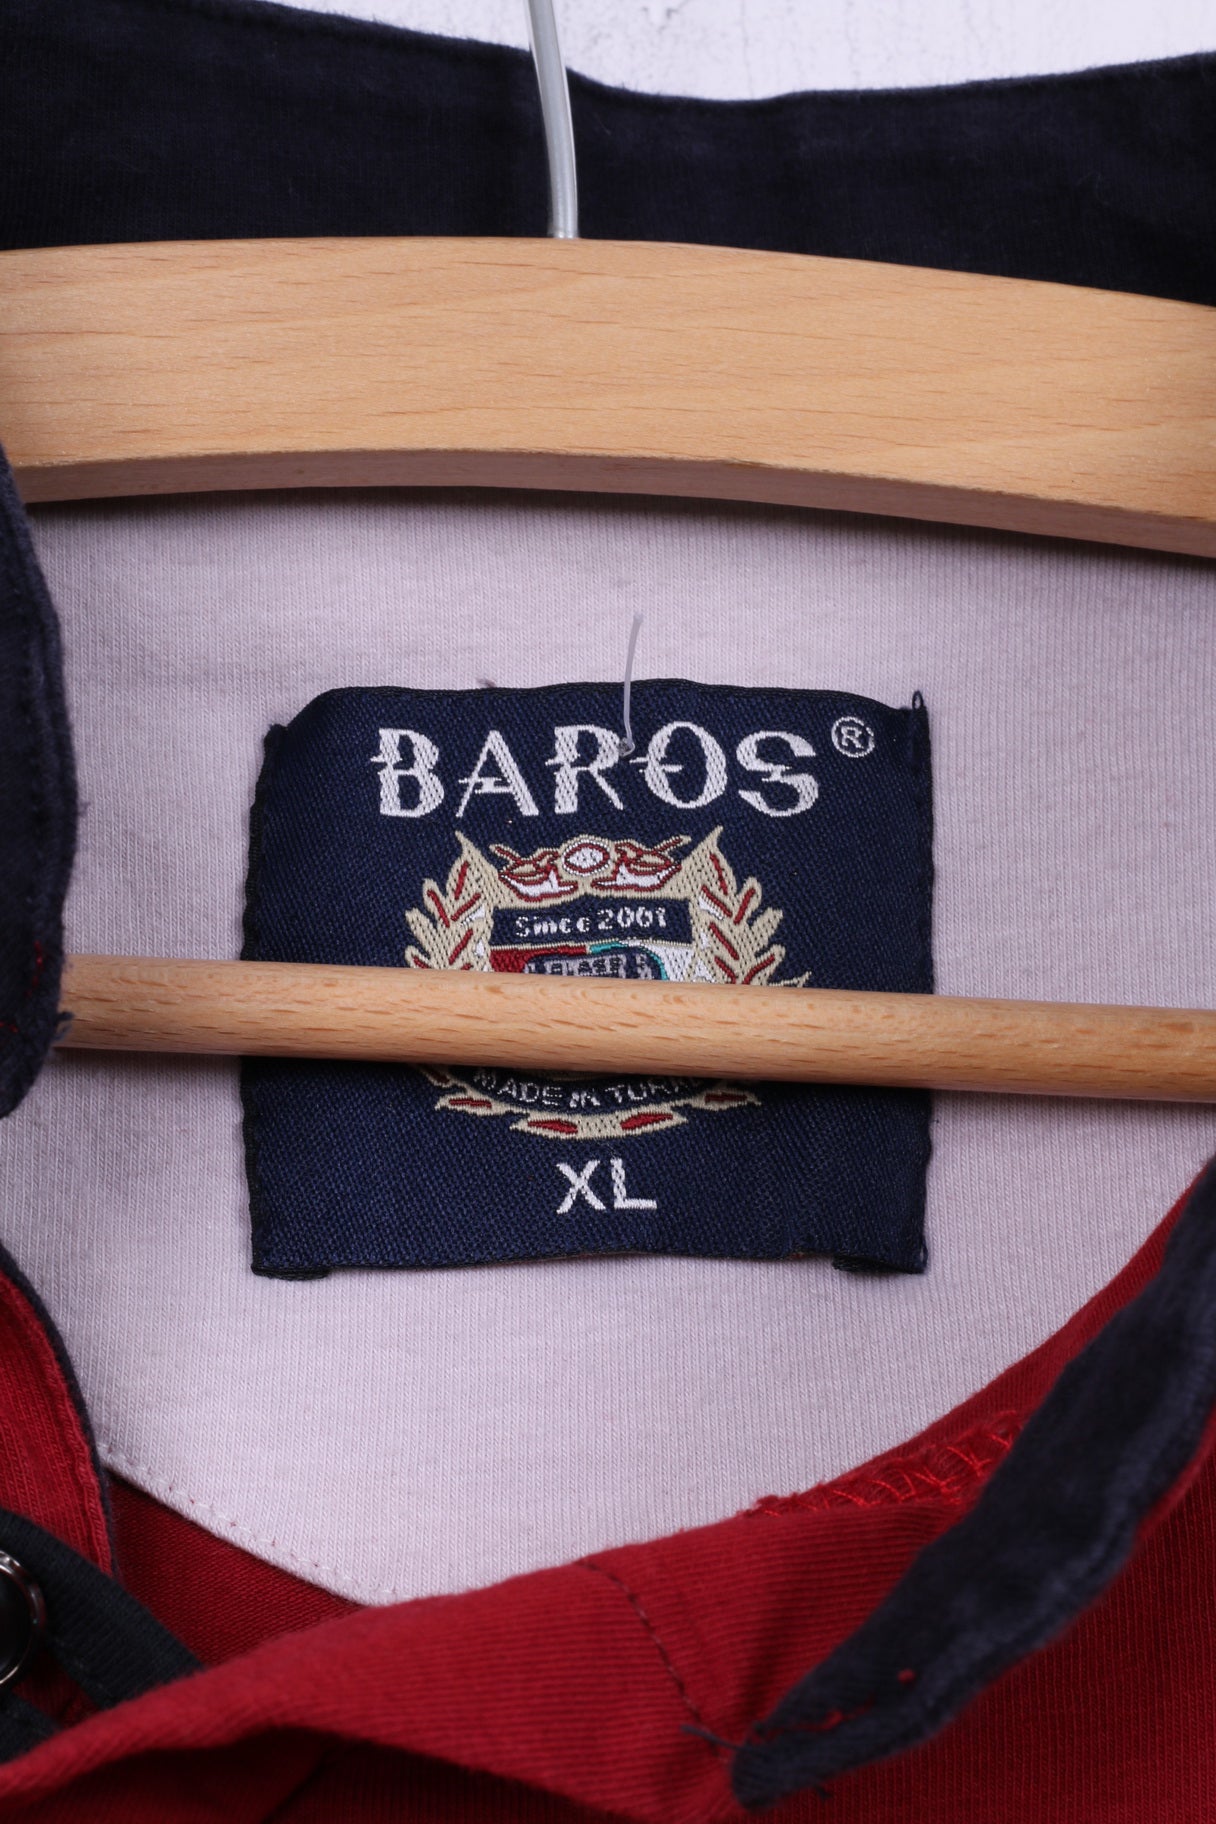 Baros Mens XL Shirt Red Stand Up Collar Cotton Top